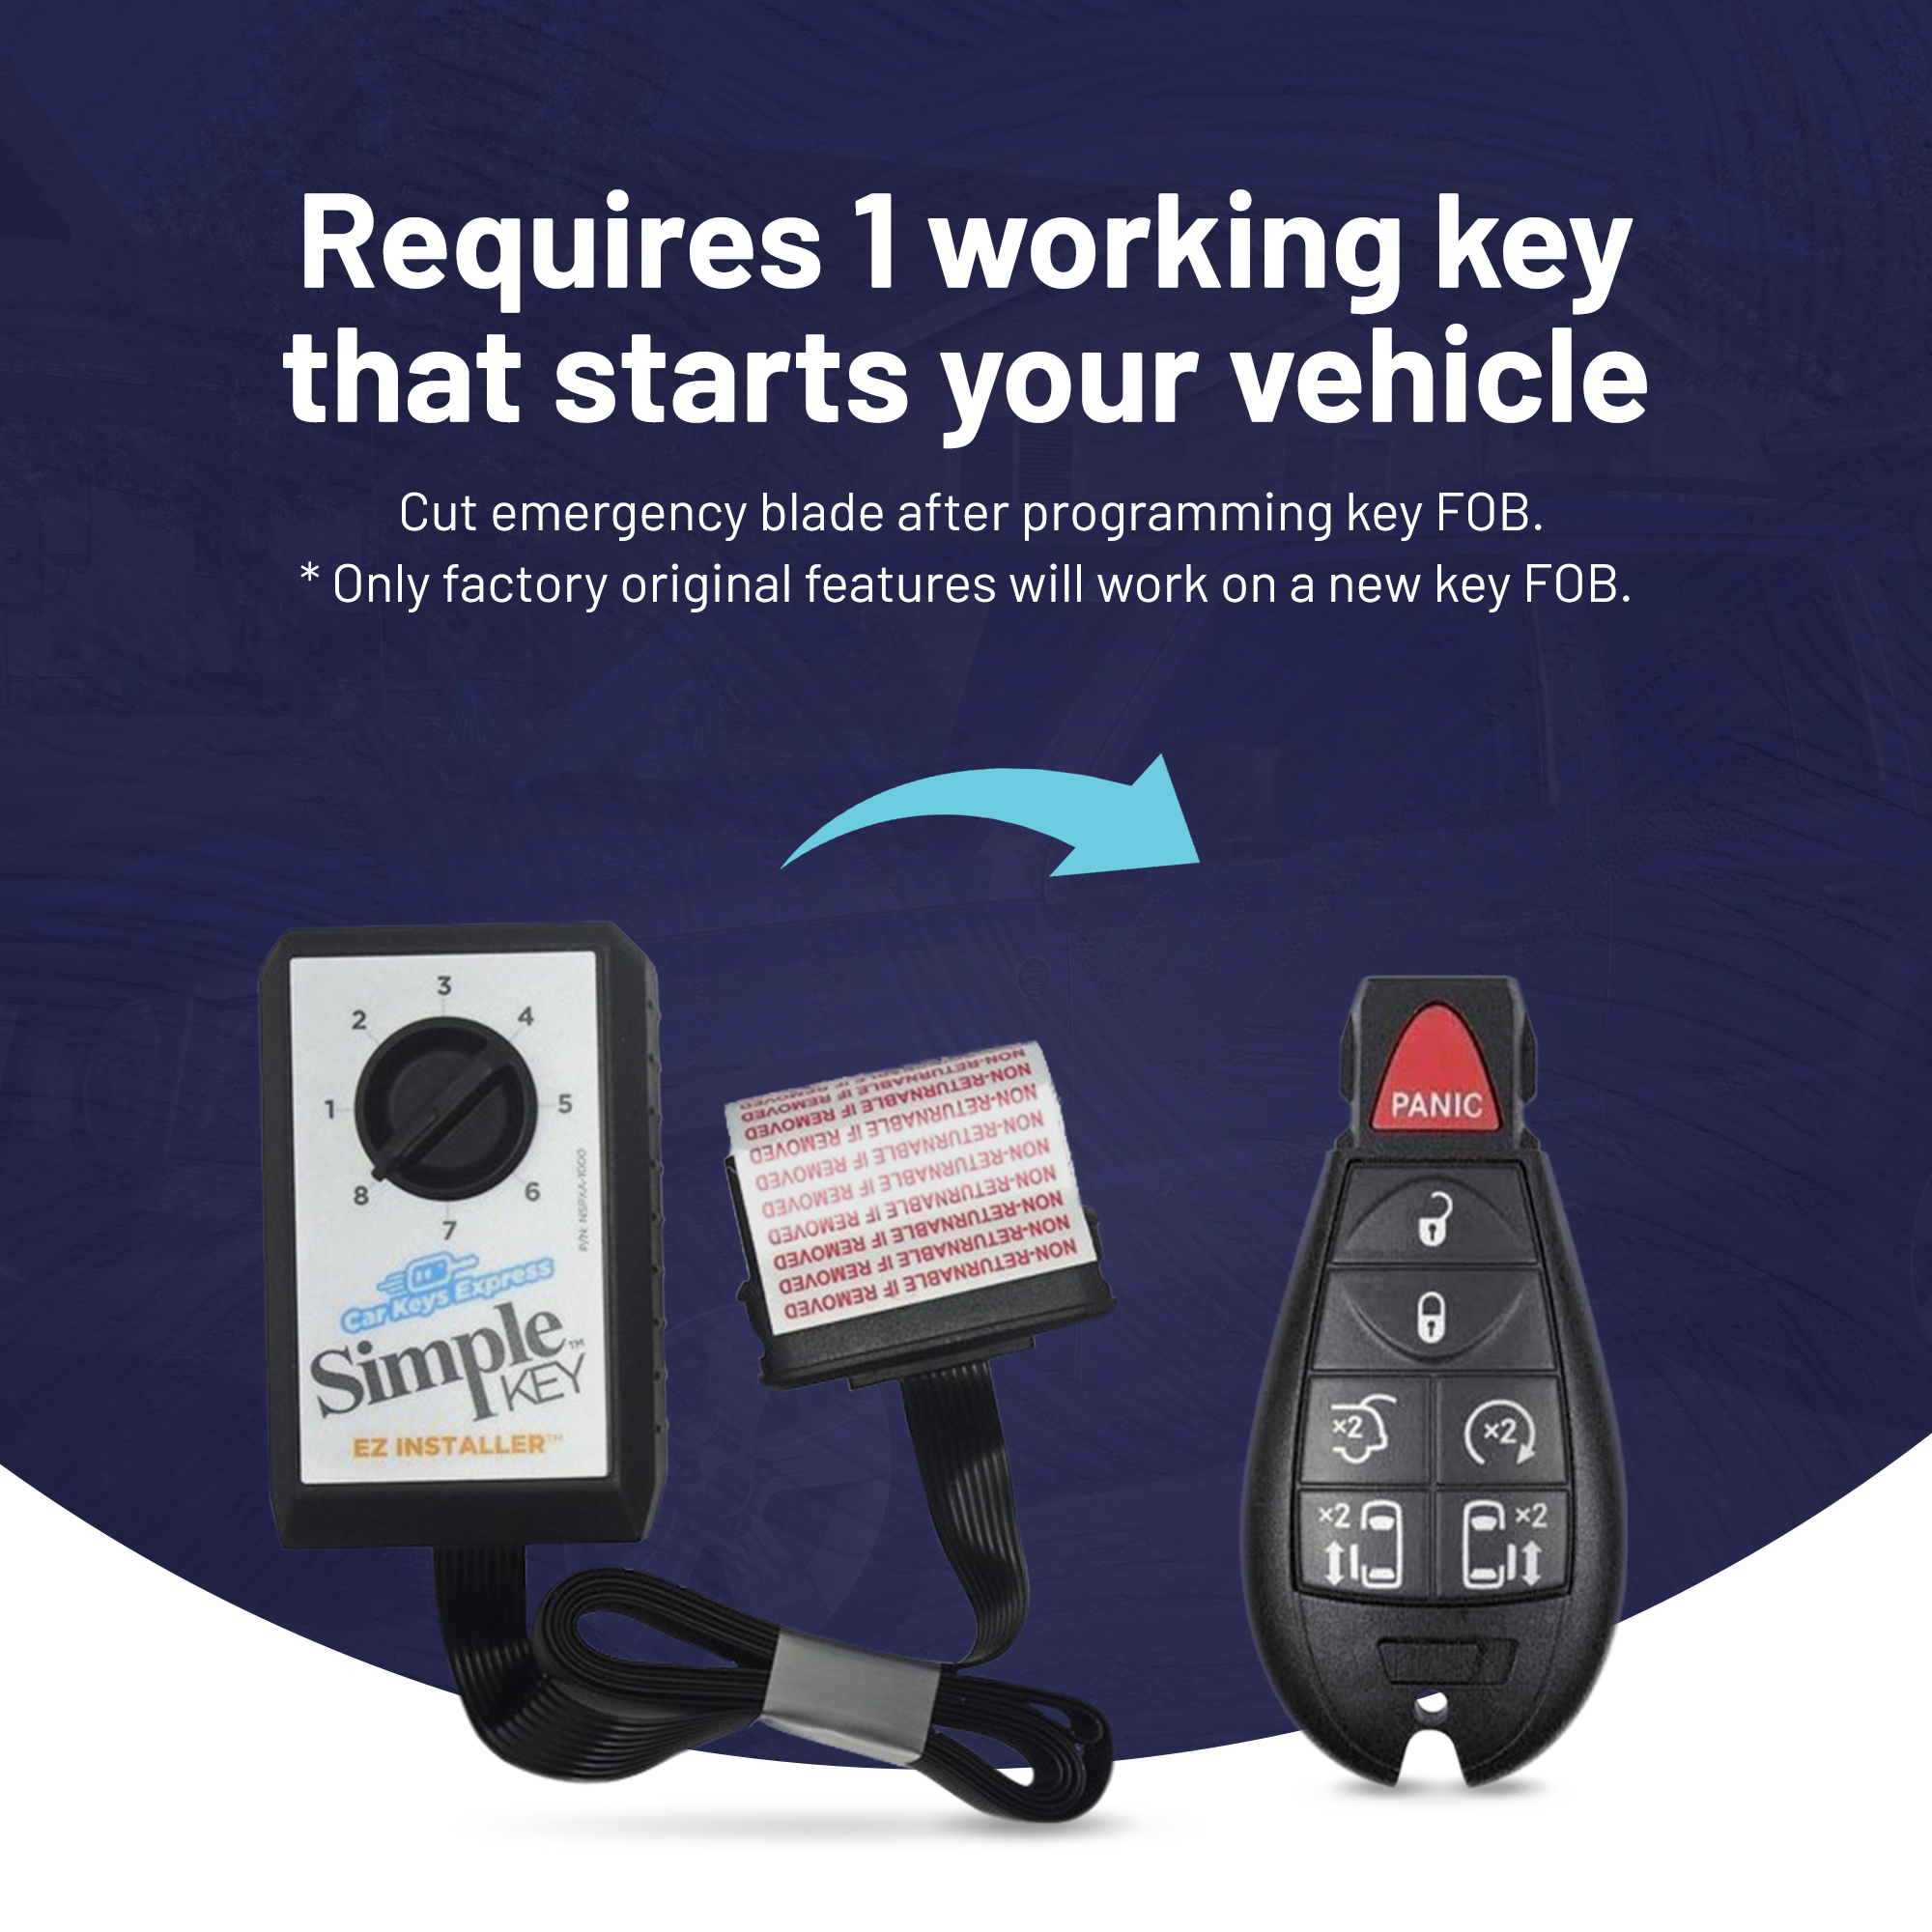 Chrysler, Dodge, Jeep and Volkswagen Simple Key Programmer for Smart Key Fob (CDFO-E7RHZ0SK-KIT) - Tom's Key Company